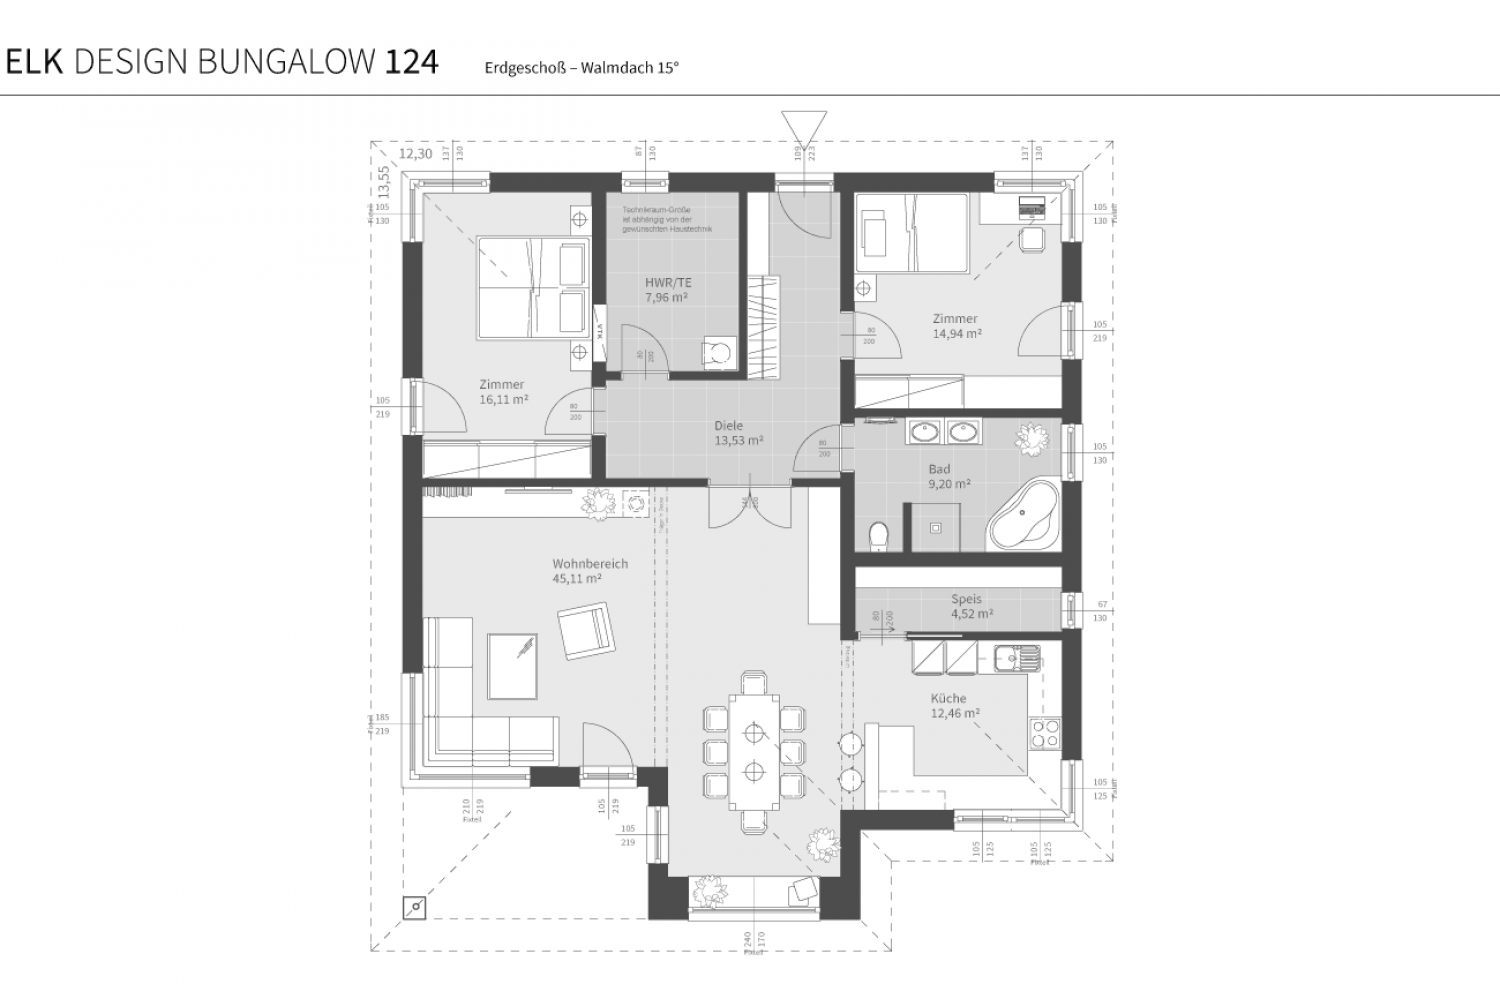 grundriss-elk-fertighaus-elk-design-bungalow-124-EG-WD